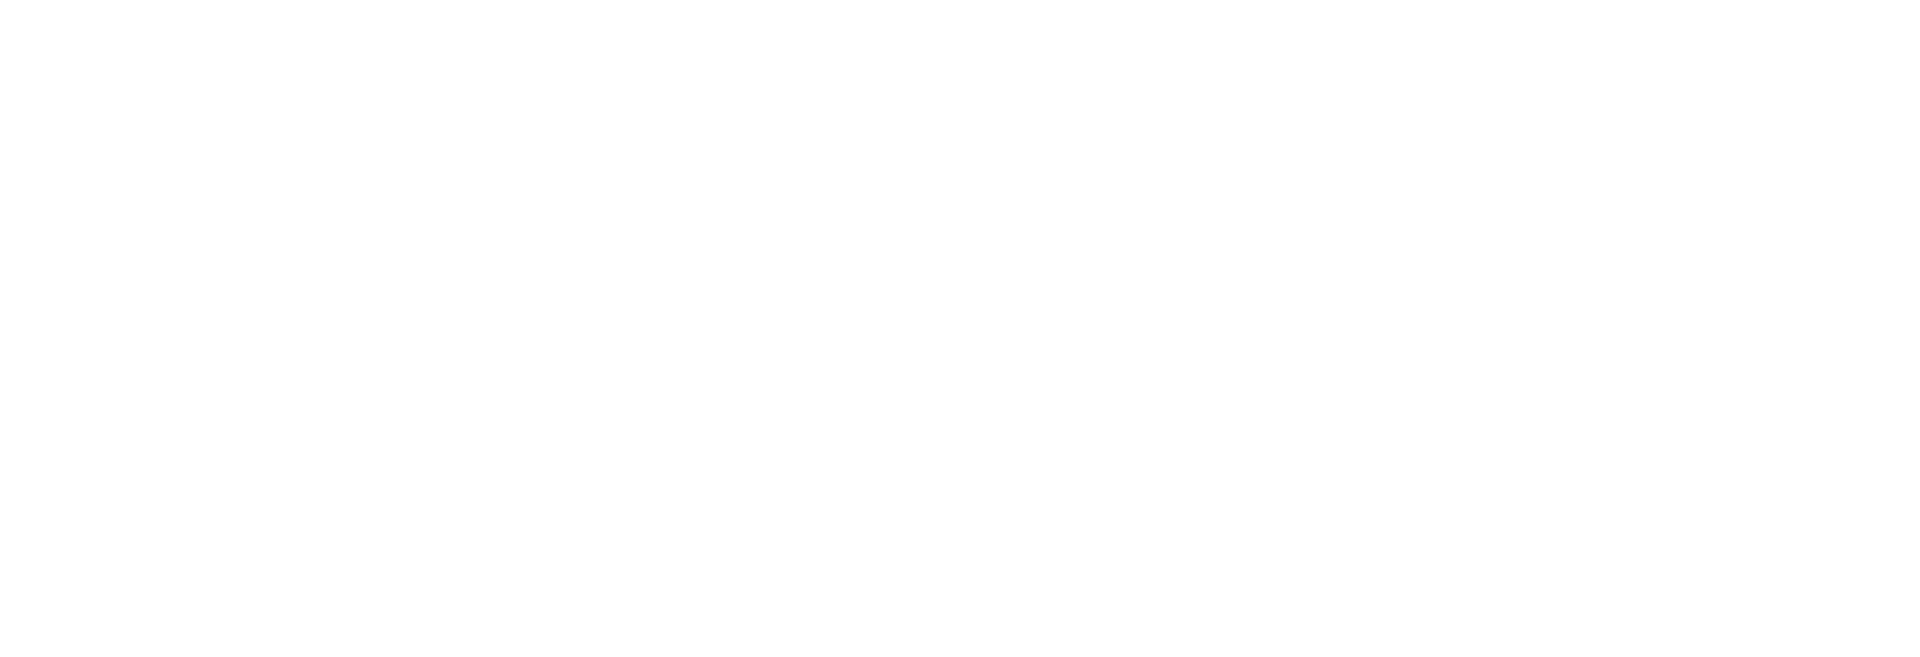 Holyoke Millwork in Holyoke logo